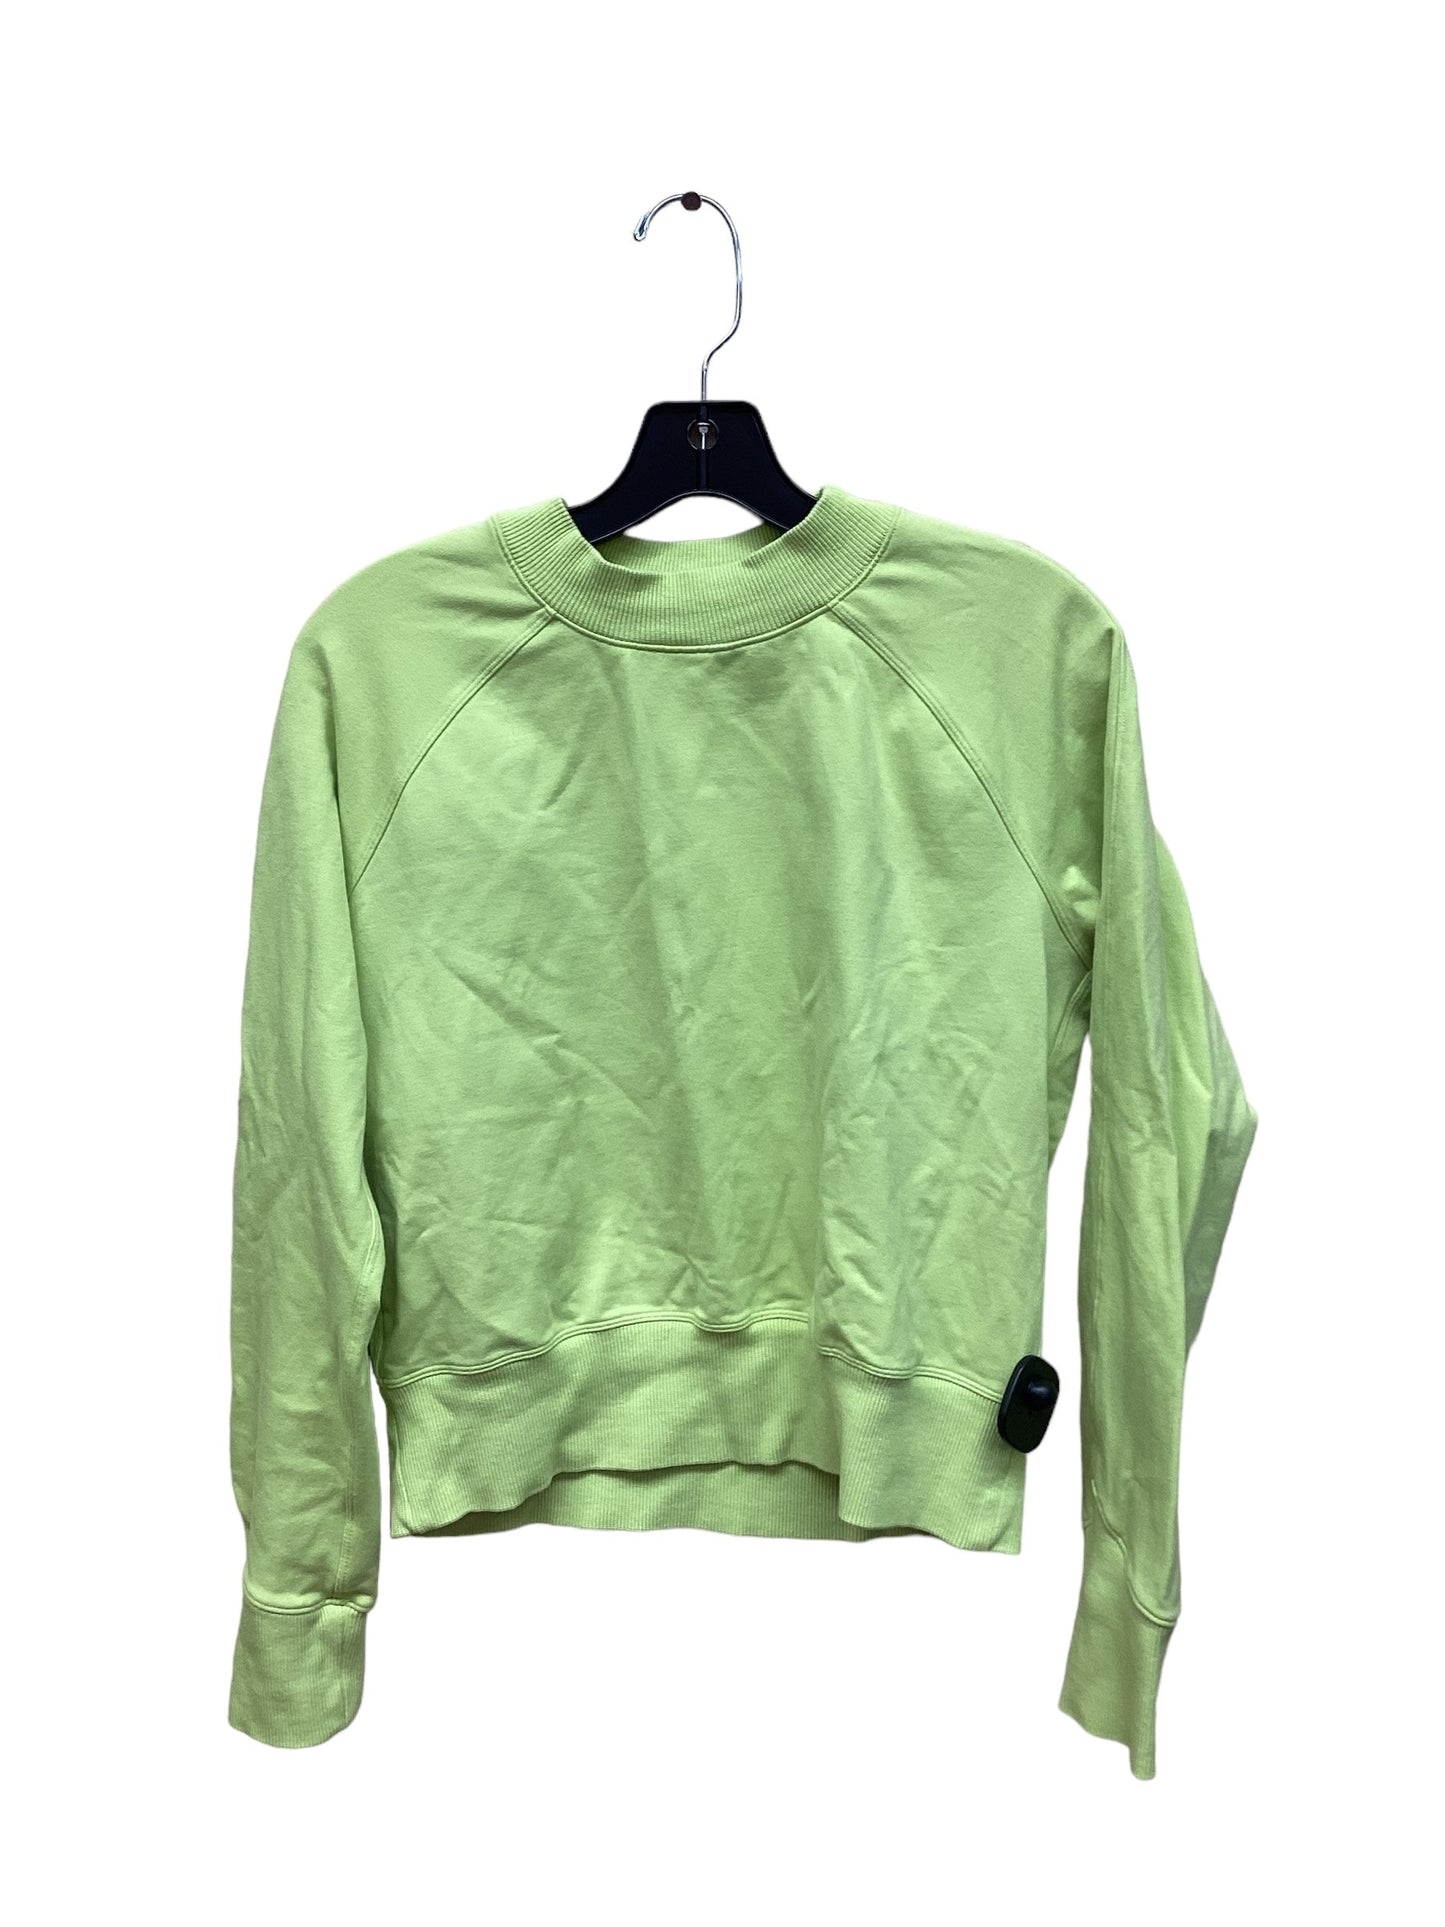 Green Athletic Sweatshirt Crewneck Lululemon, Size S